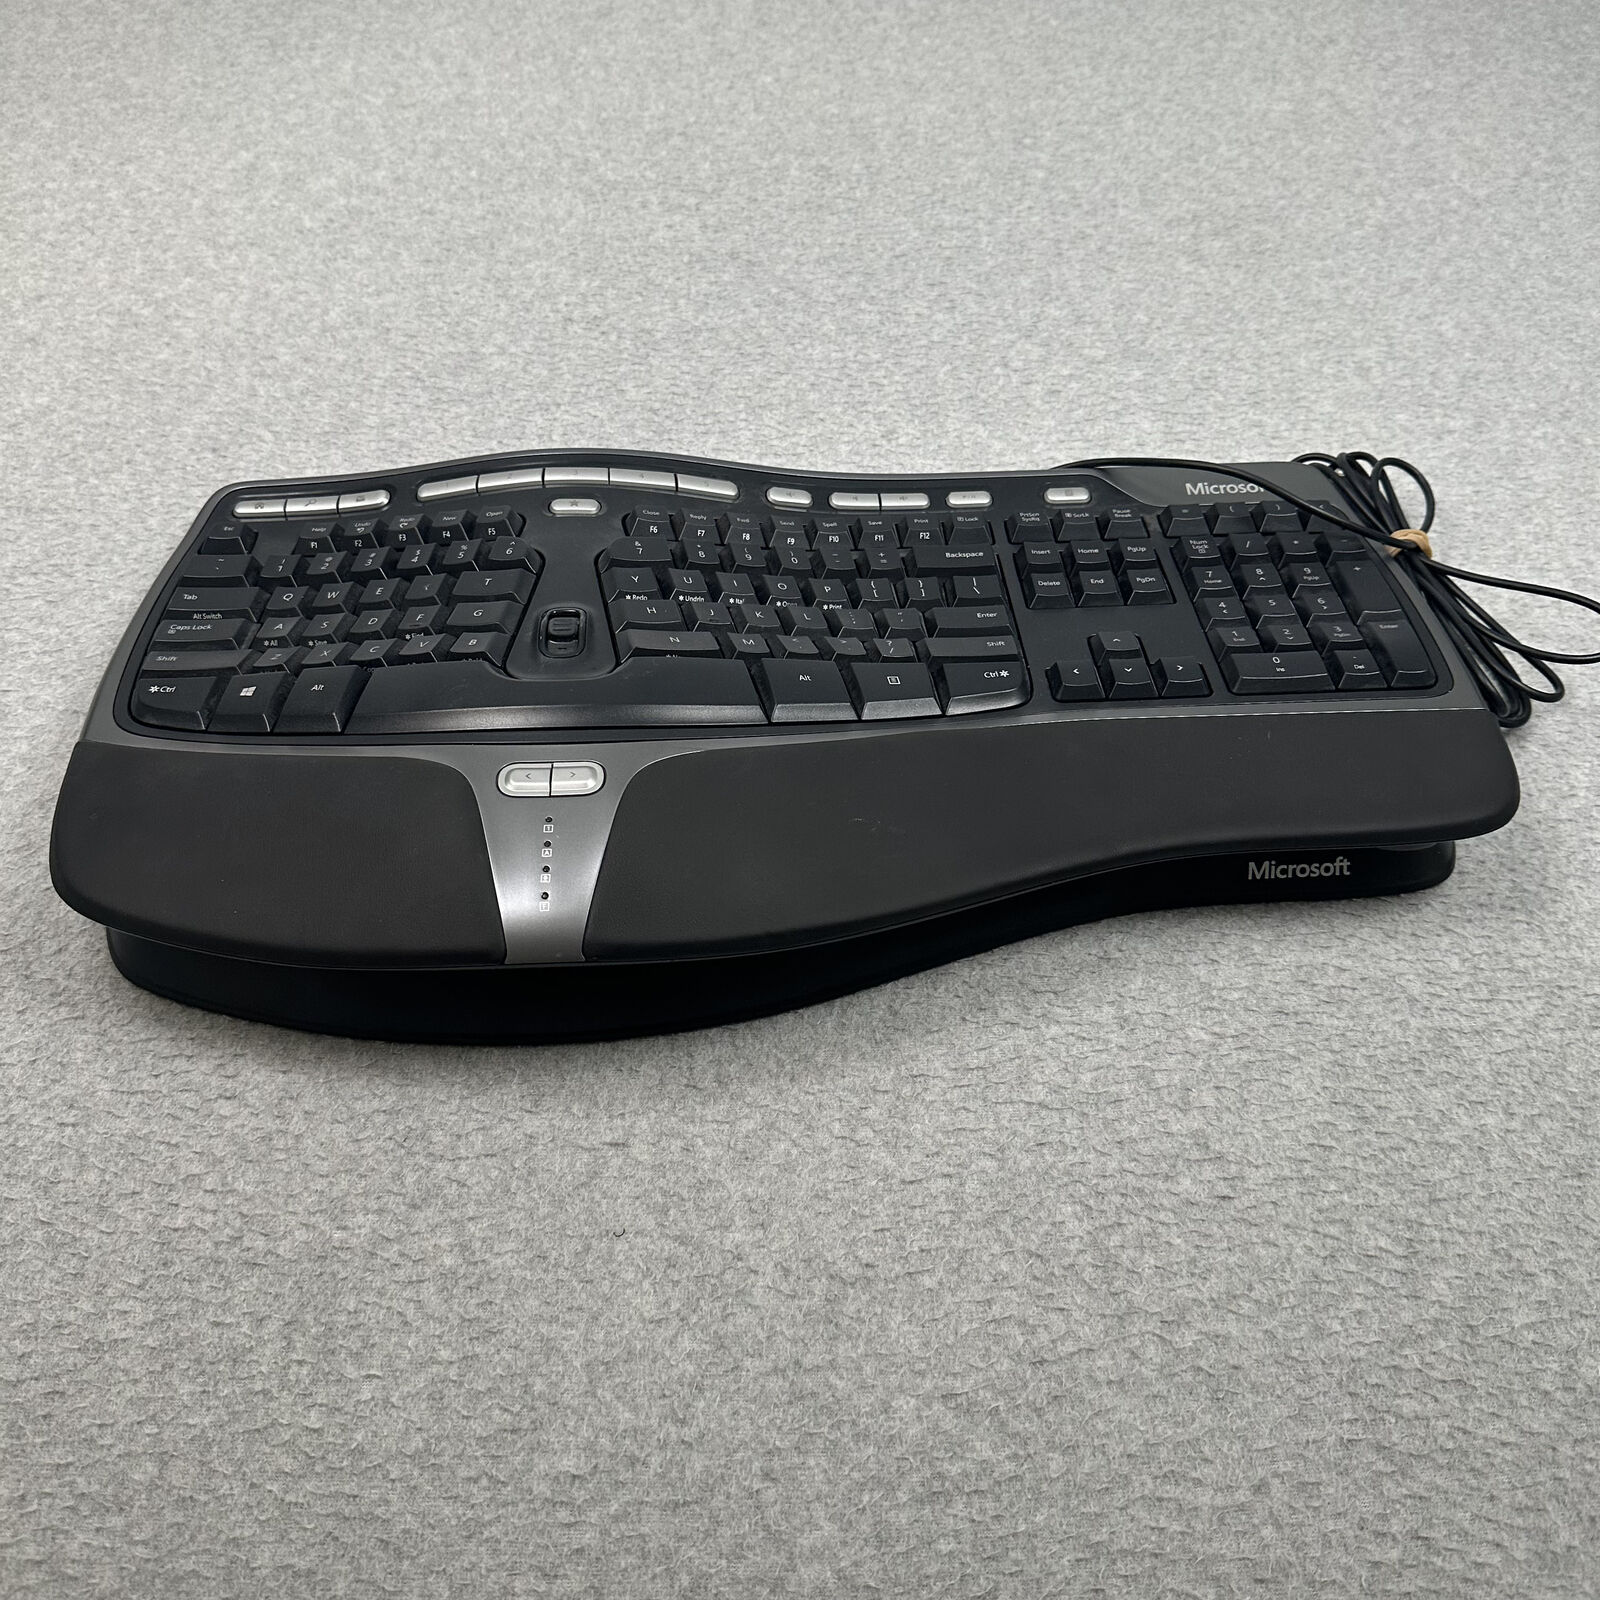 Microsoft keyboard black Natural Ergonomic 4000 v1.0 Model 1048 KU-0462 W stand